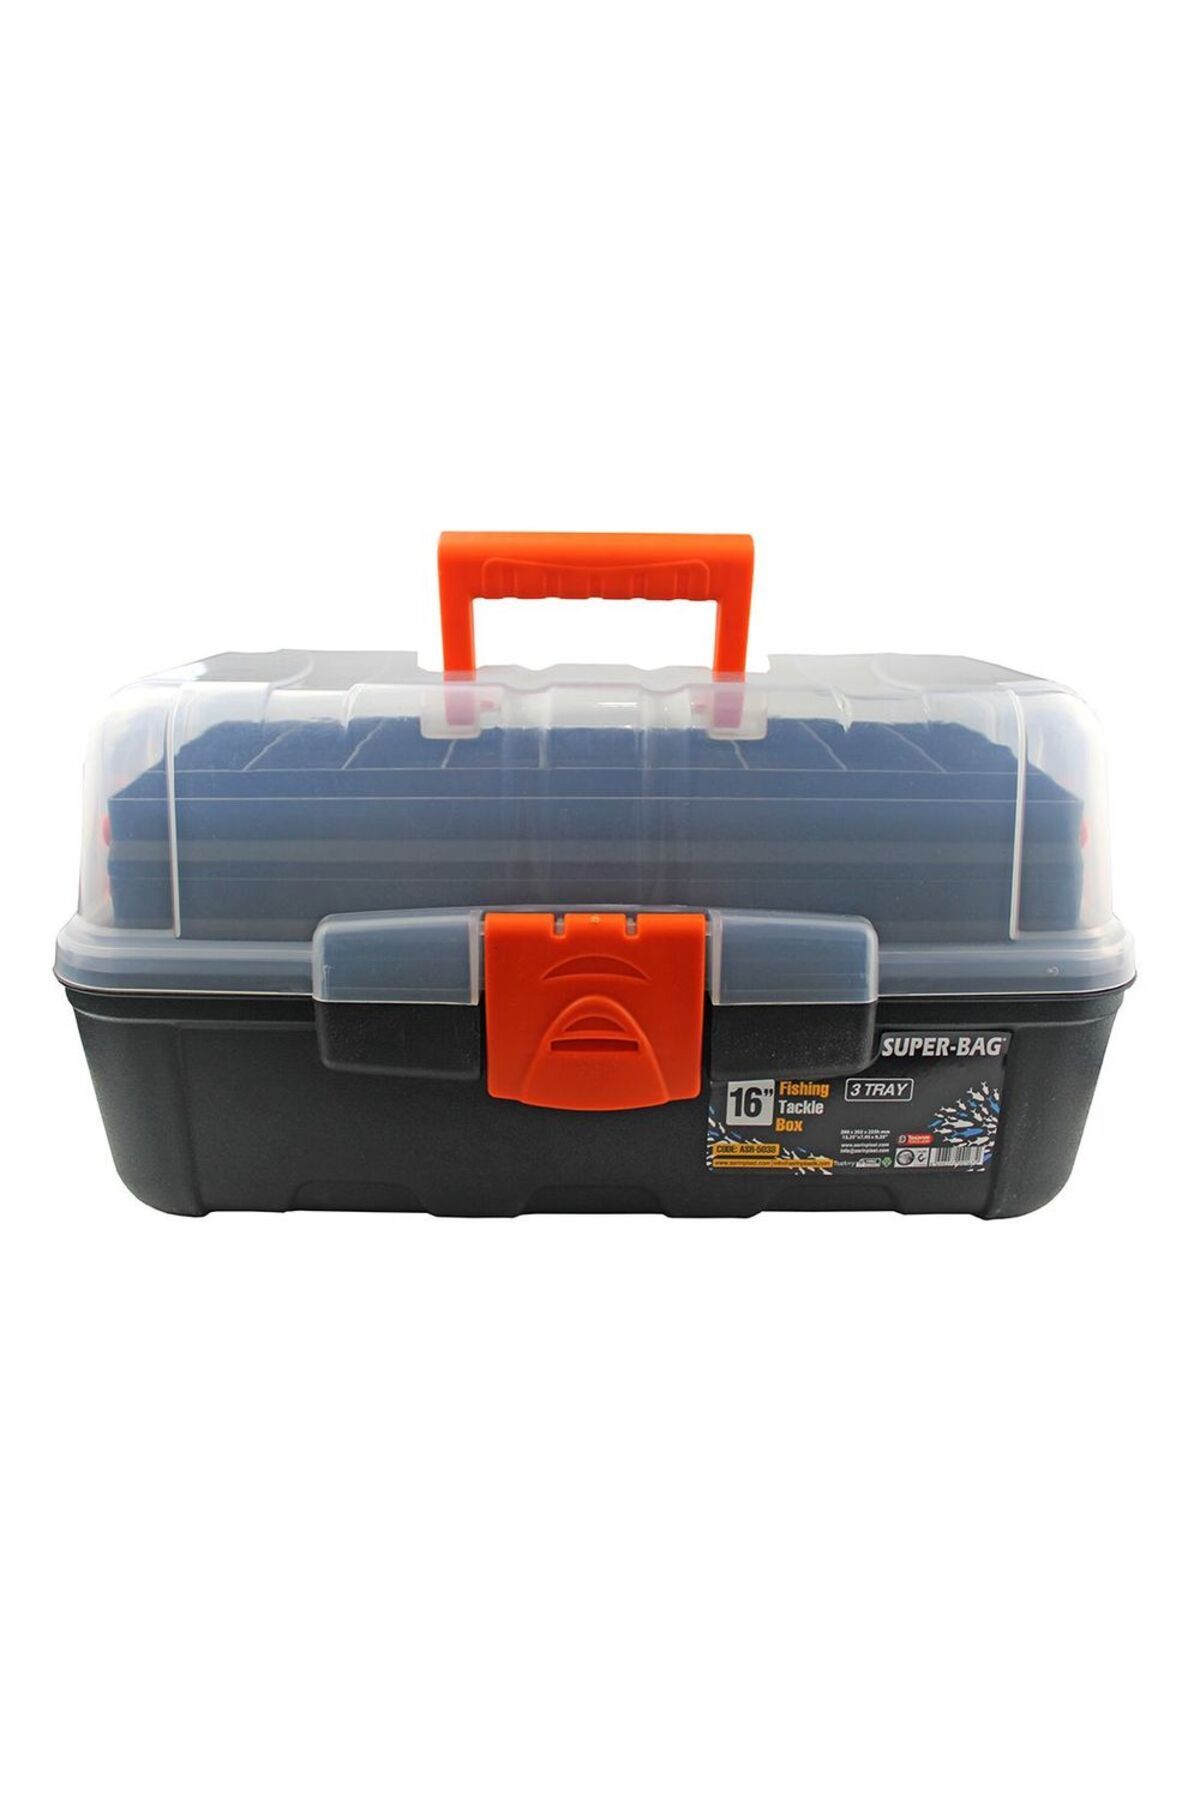 Süper Bag Super Bag 16 Fishing Tackle Box Fiyatı, Yorumları - Trendyol